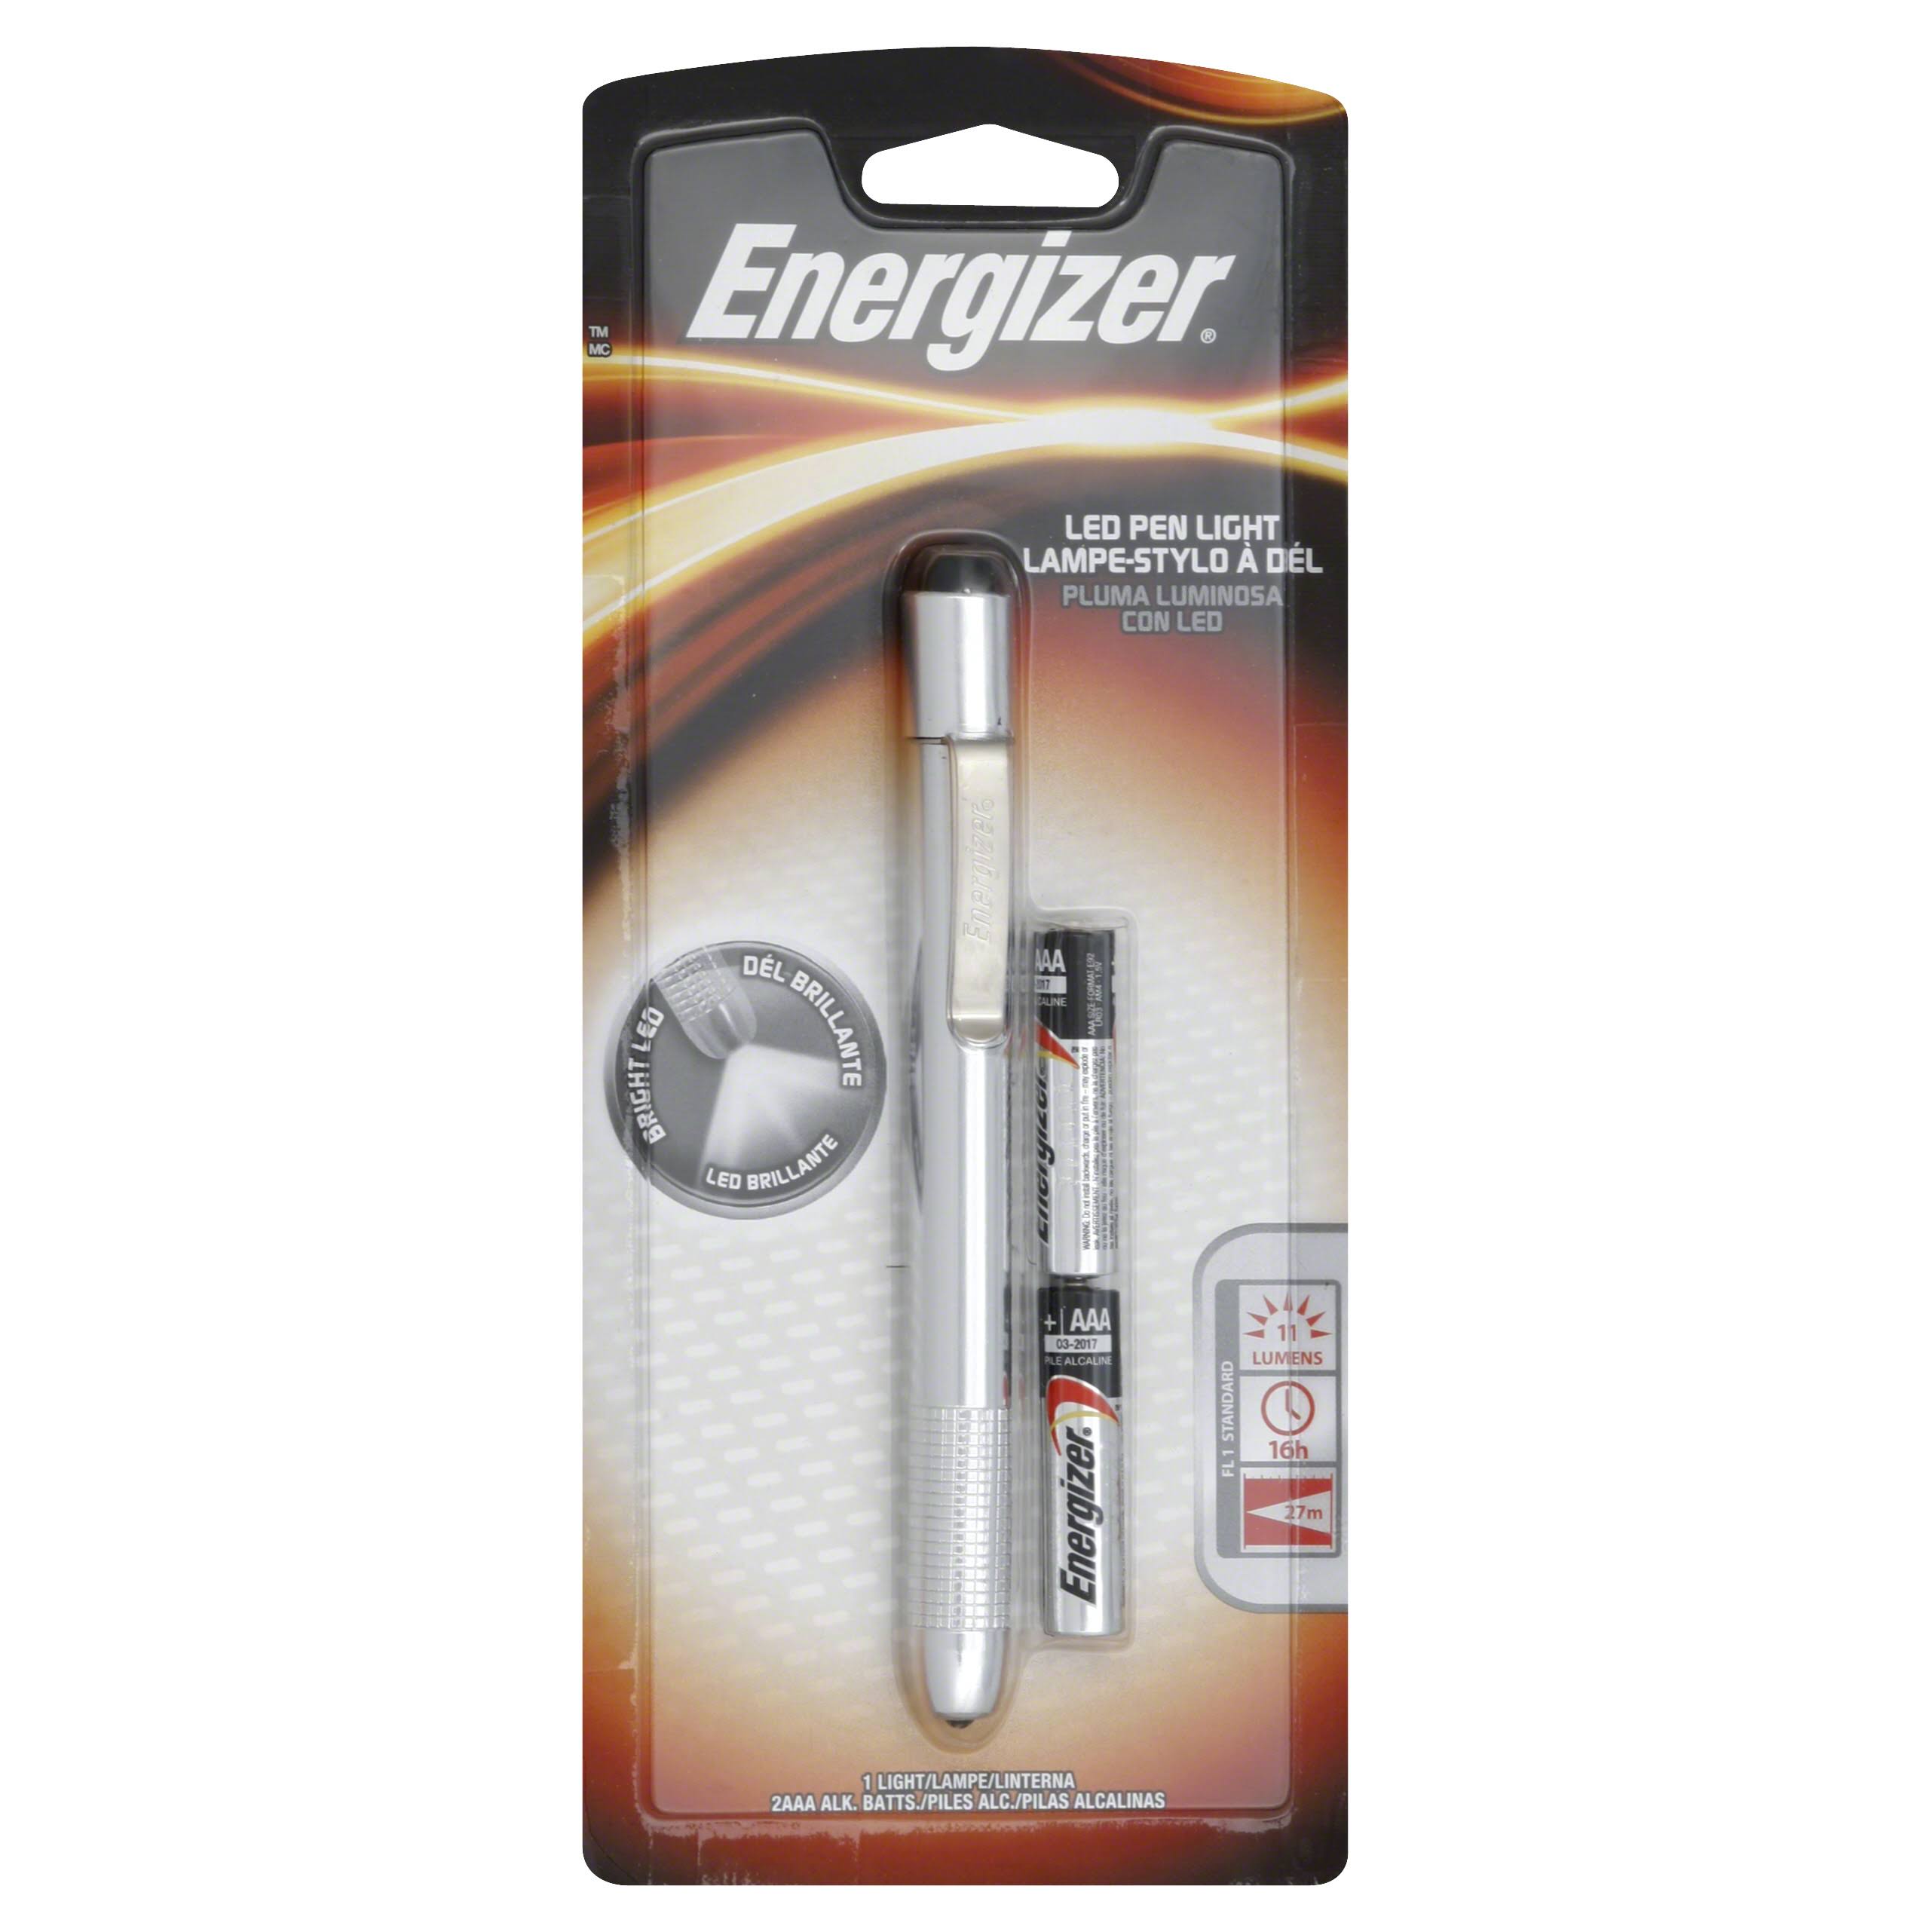 Energizer Led Pen Light - Black